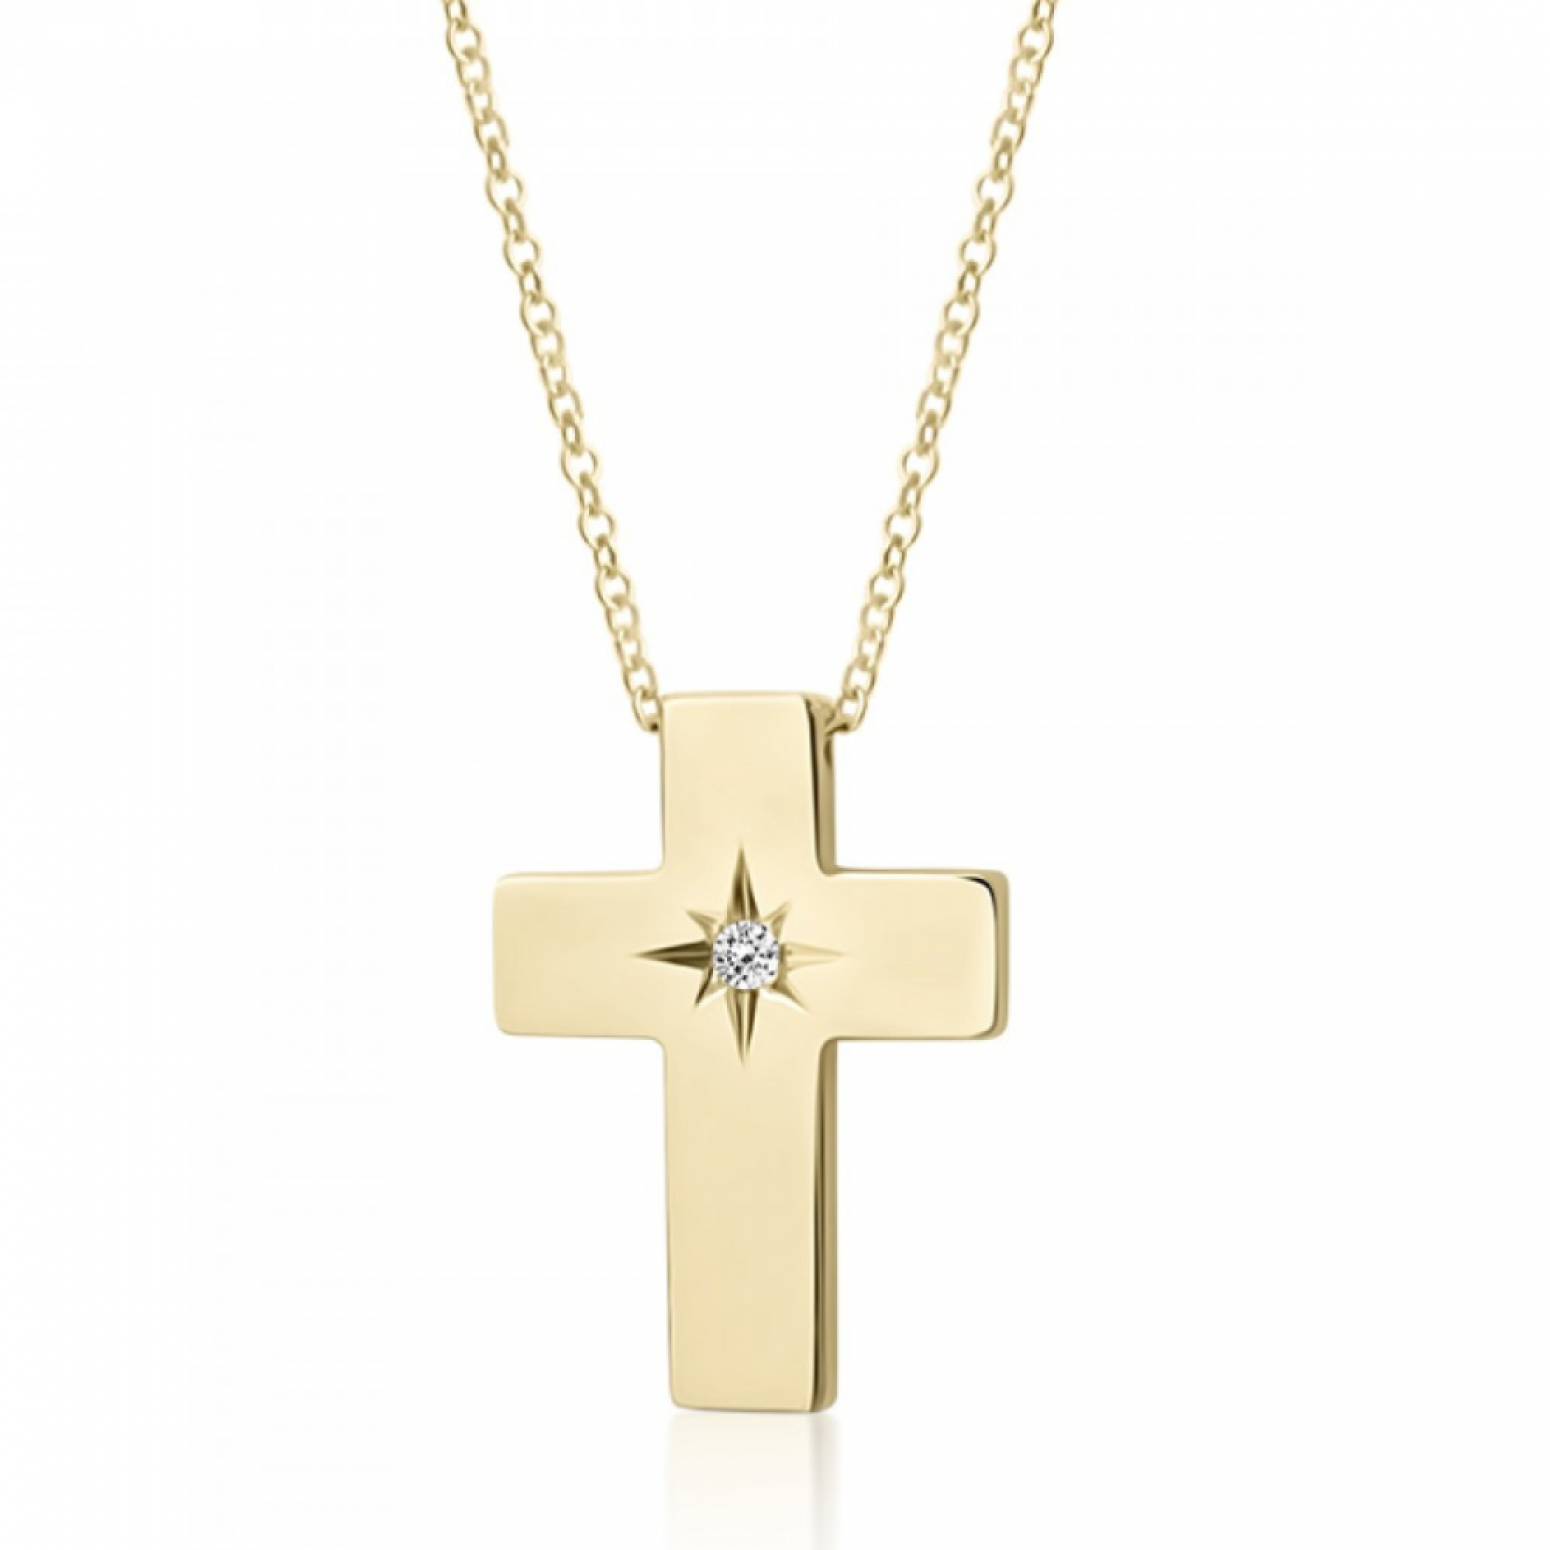 Baptism cross with chain K14 gold with diamond 0.02ct, VS2, H ko5291 CROSSES Κοσμηματα - chrilia.gr